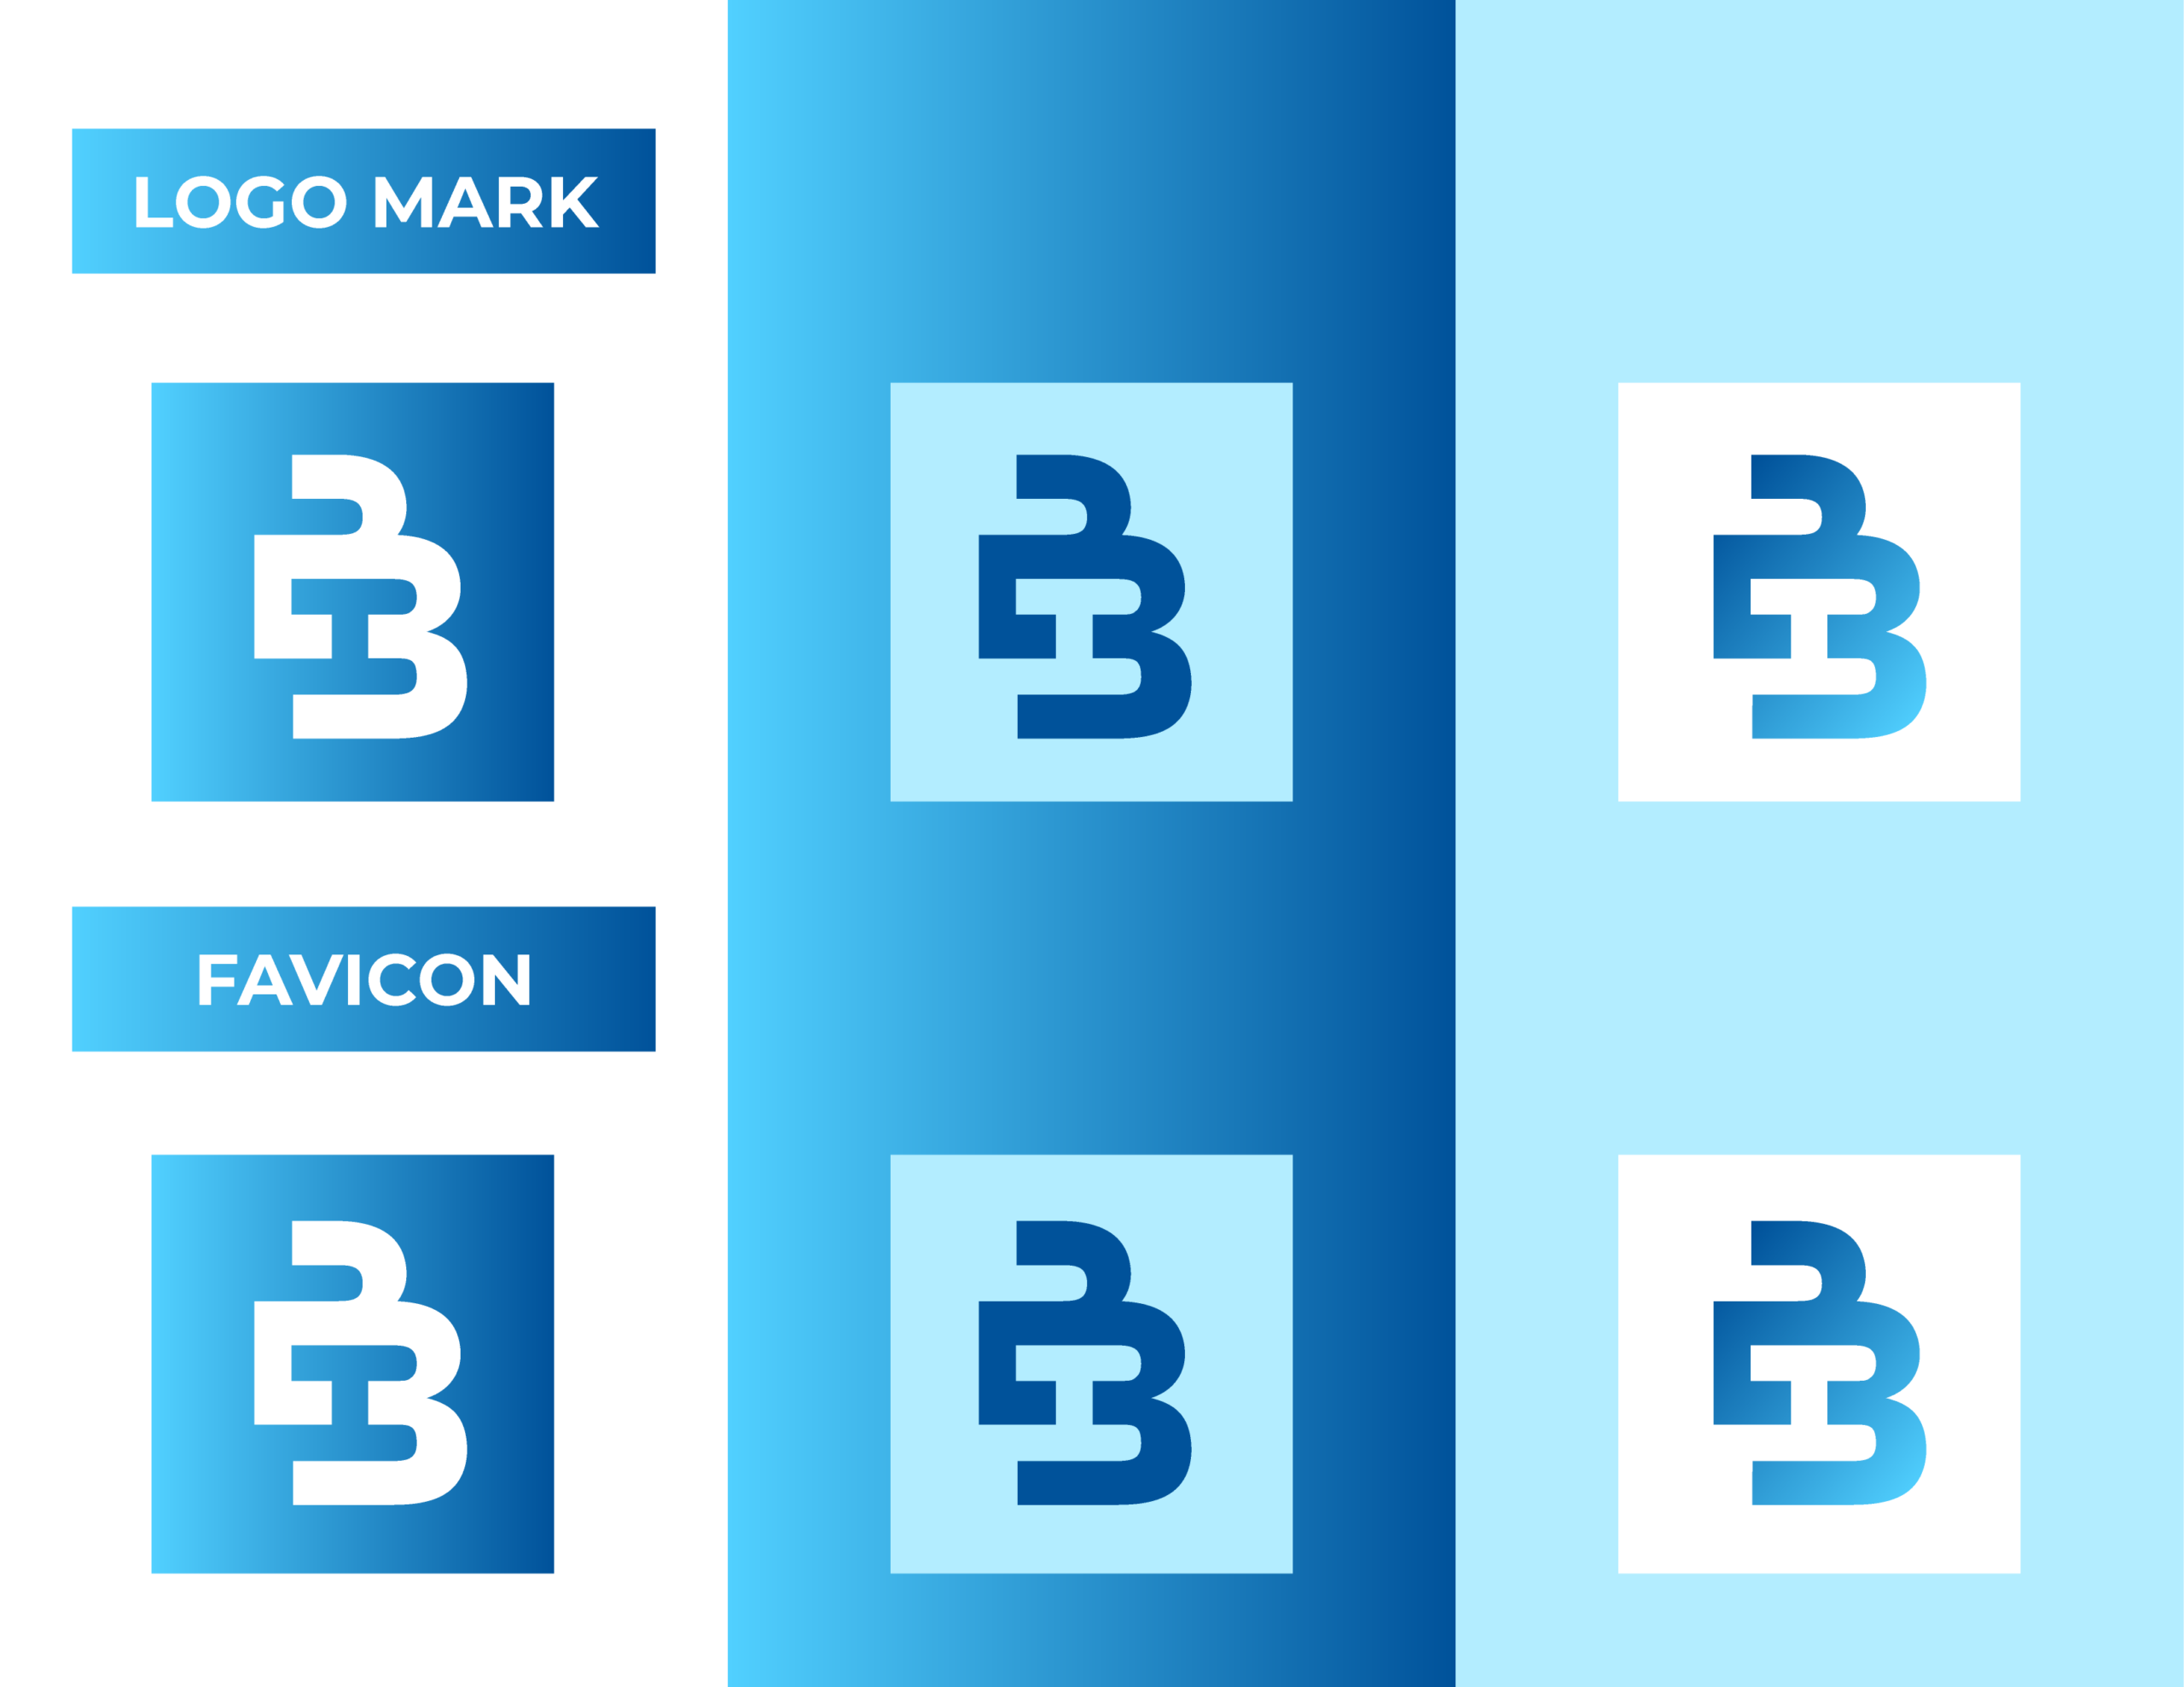 02BKBK_Logo Mark and Favicon